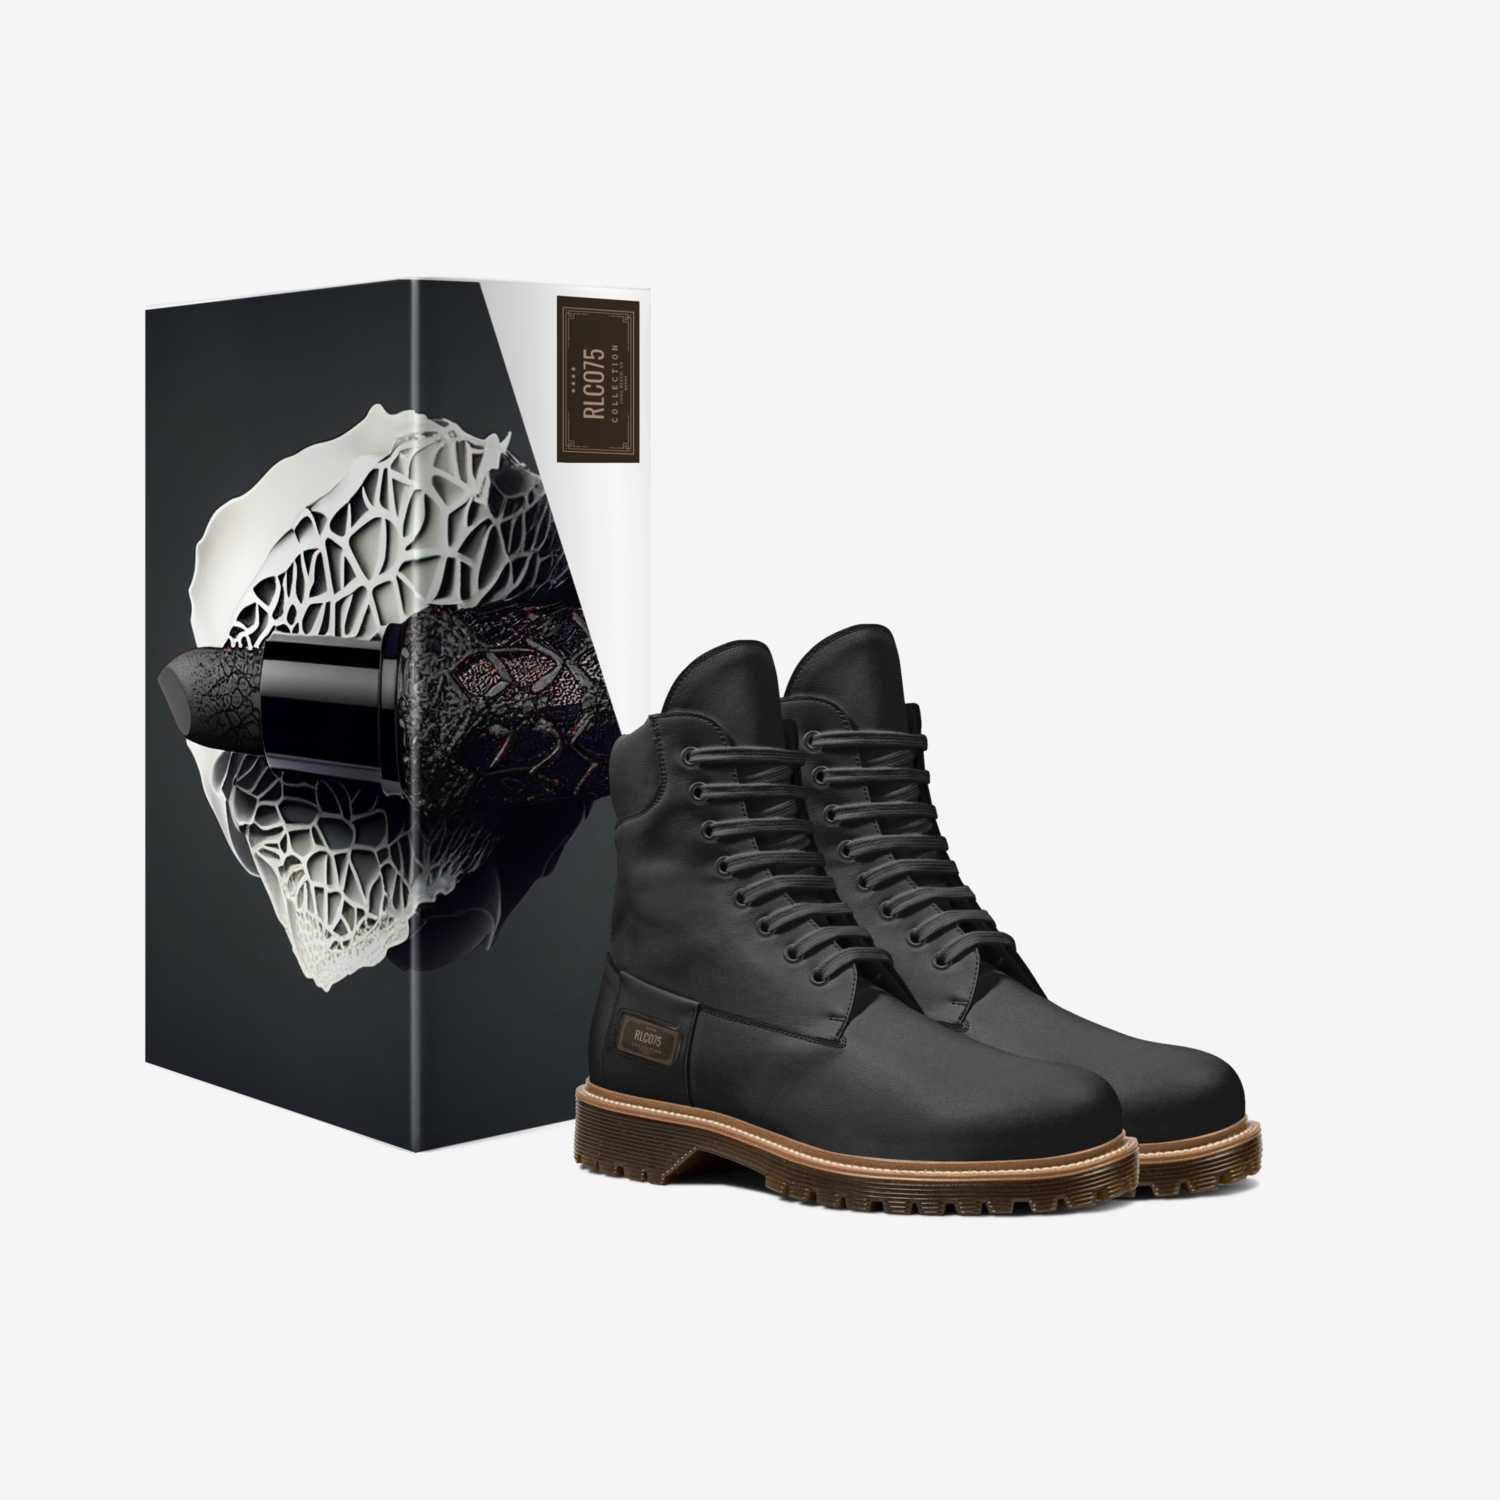 RLCO75  custom made in Italy shoes by Rashanda Lyons | Box view